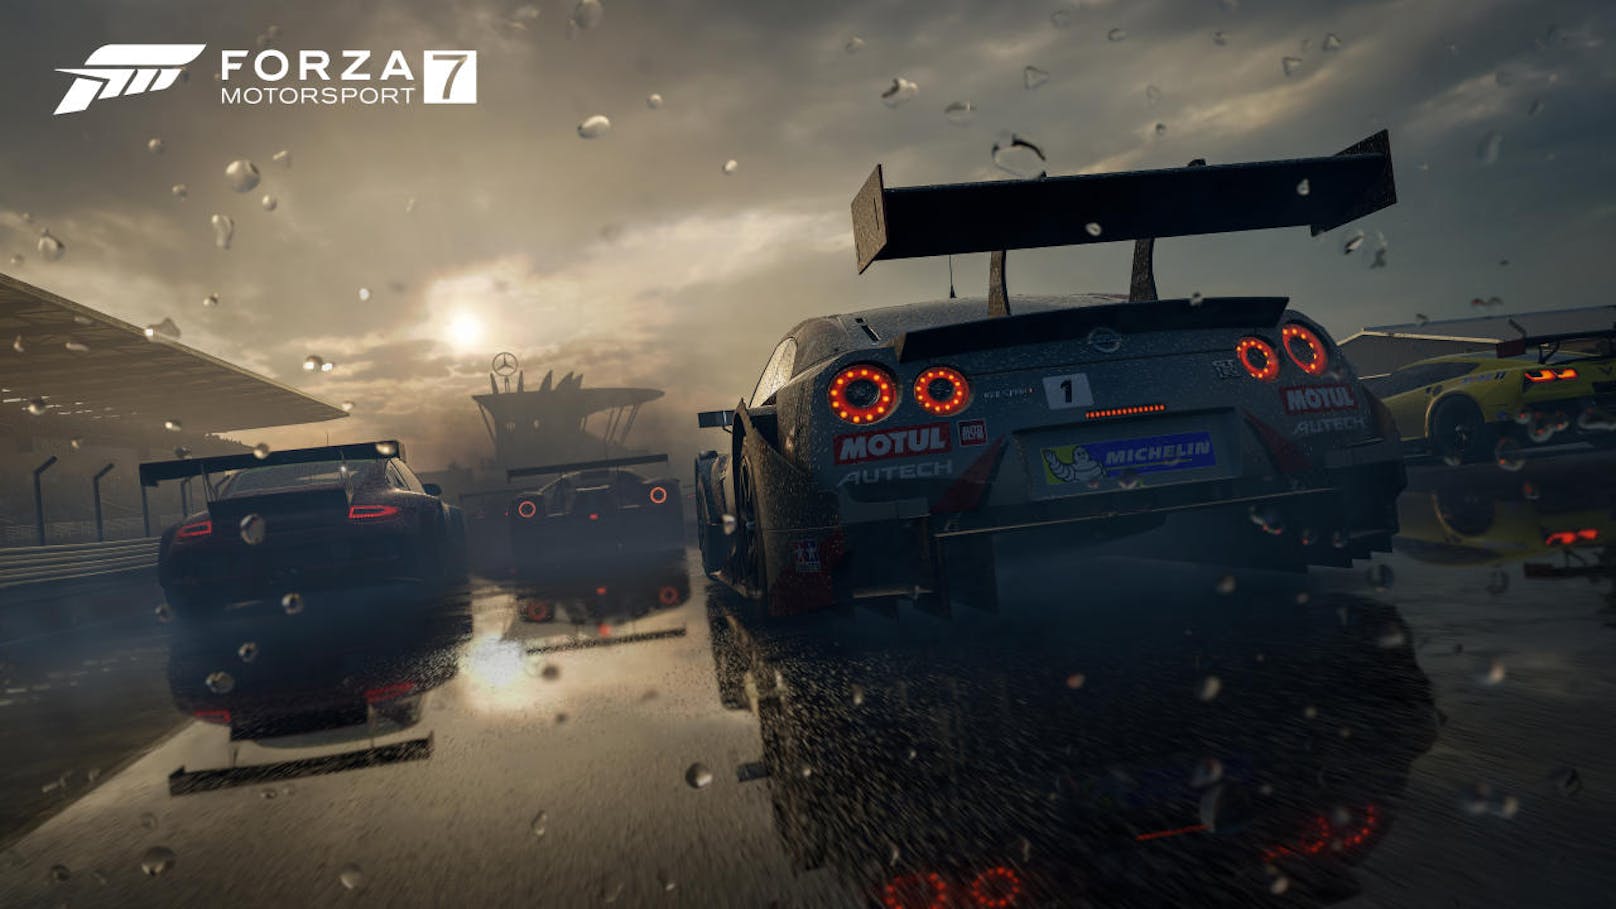  <a href="https://www.heute.at/digital/games/story/Forza-7-45276736" target="_blank">Forza Motorsport 7</a>